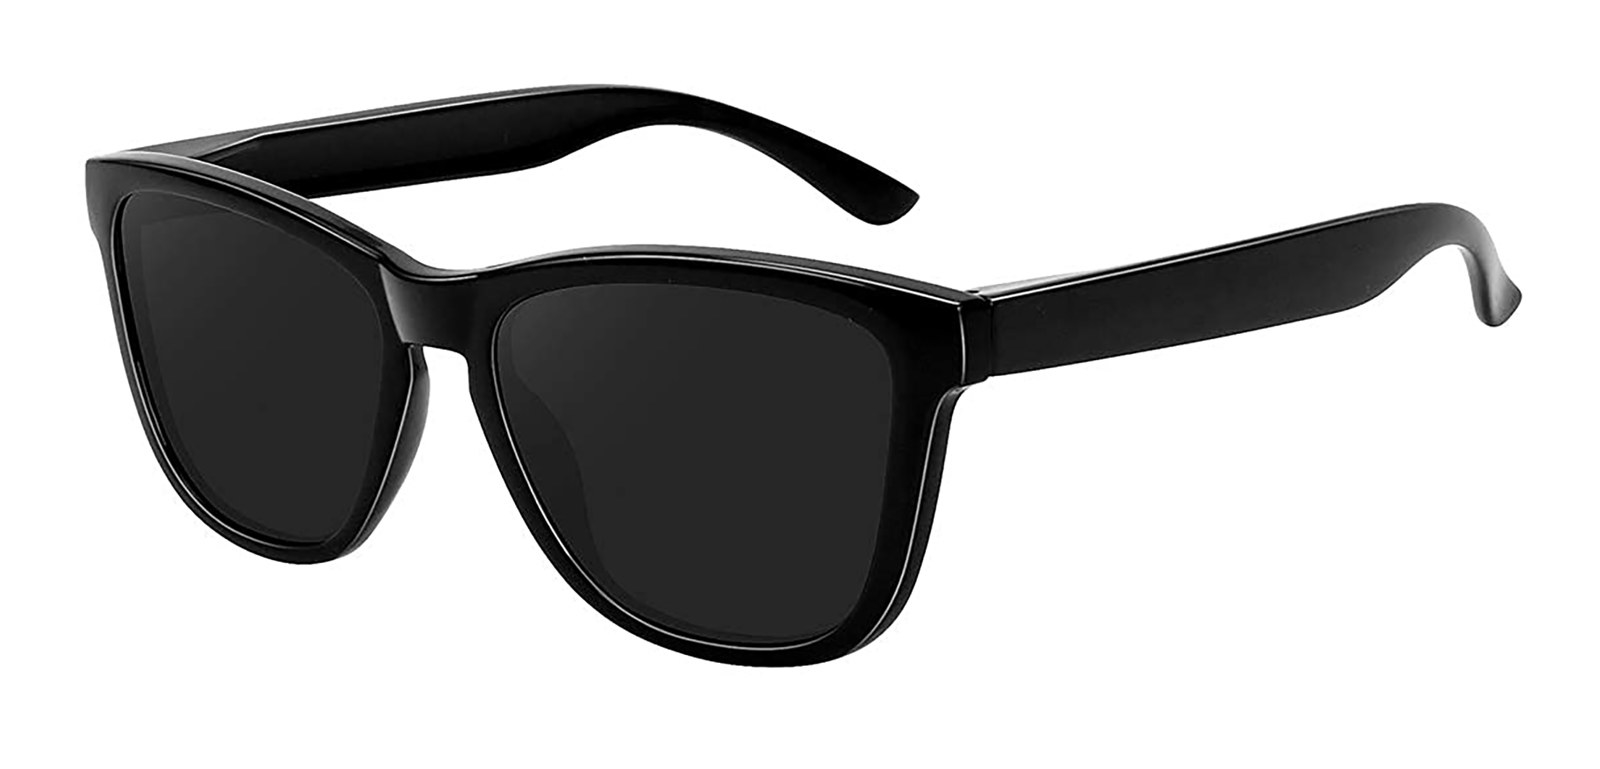 An image of MeetSun Polarized Sunglasses
